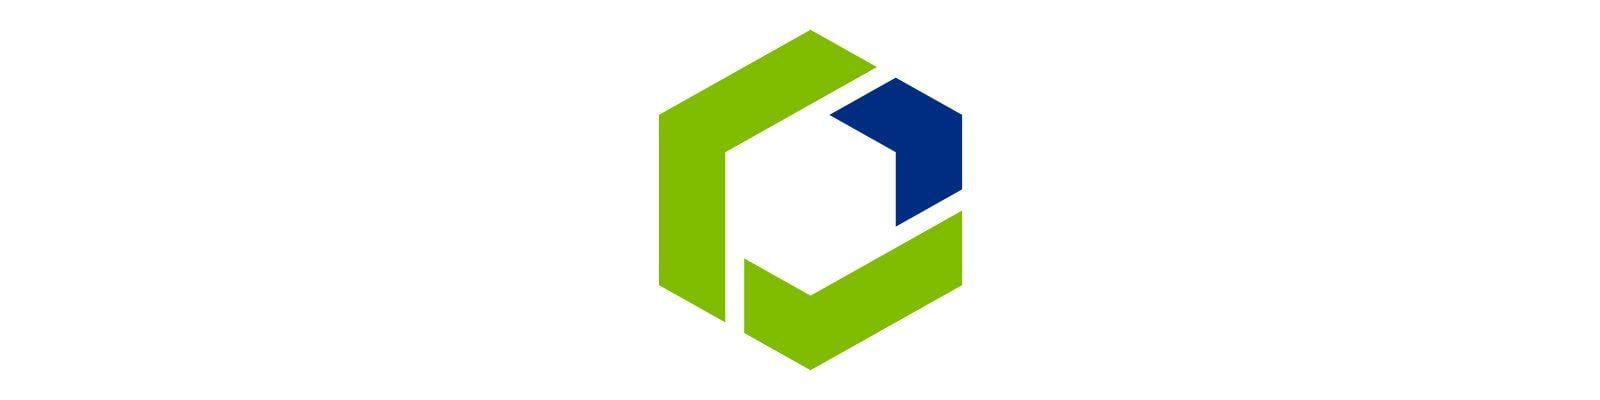 Bldg Logo - Cornerstone Building Brands